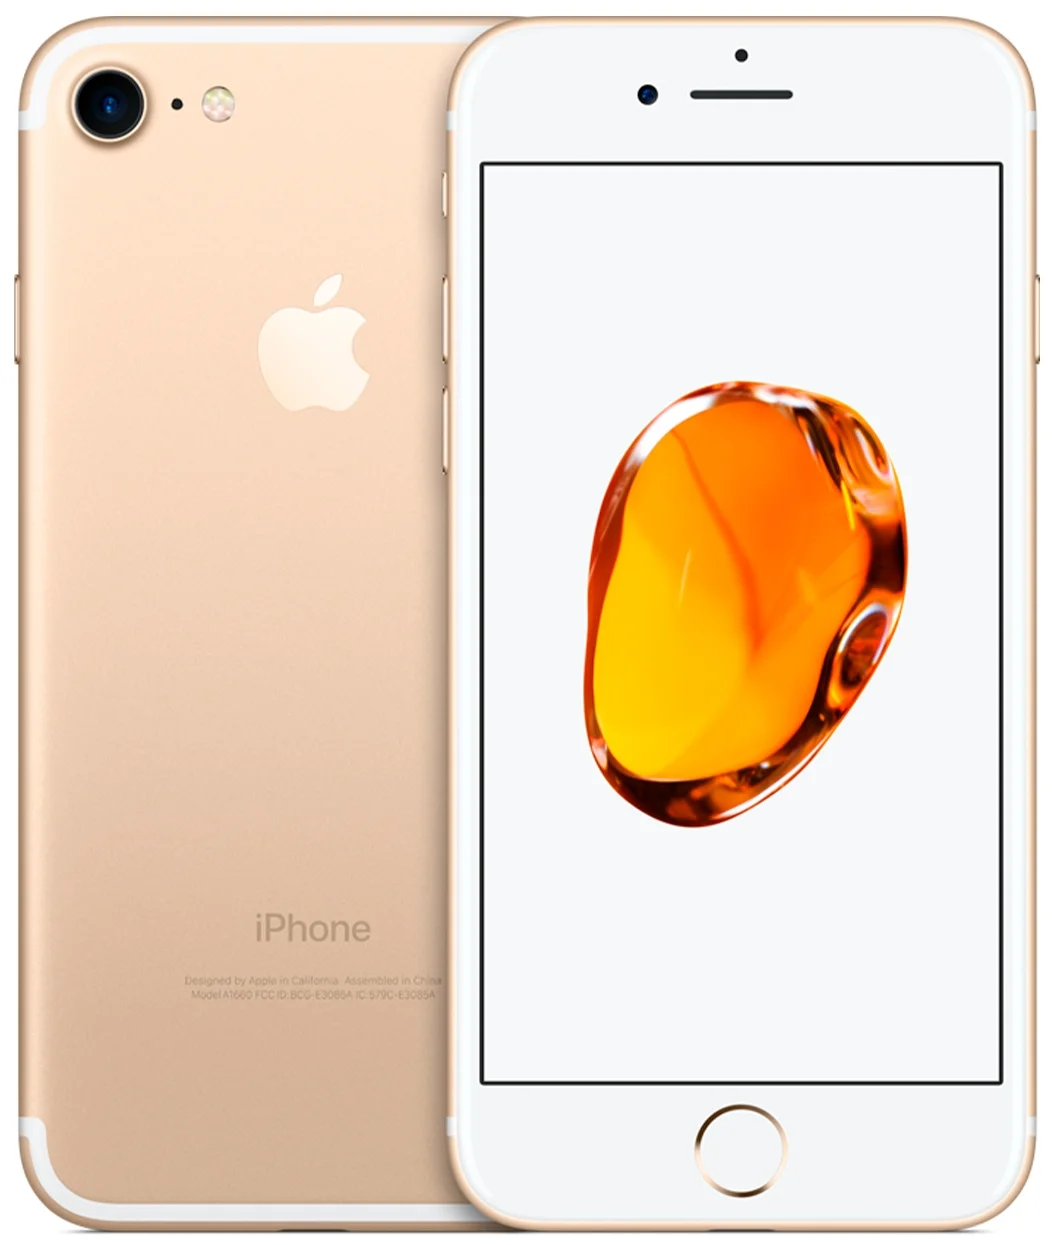 Apple iPhone 7 - операционная система: iOS 10